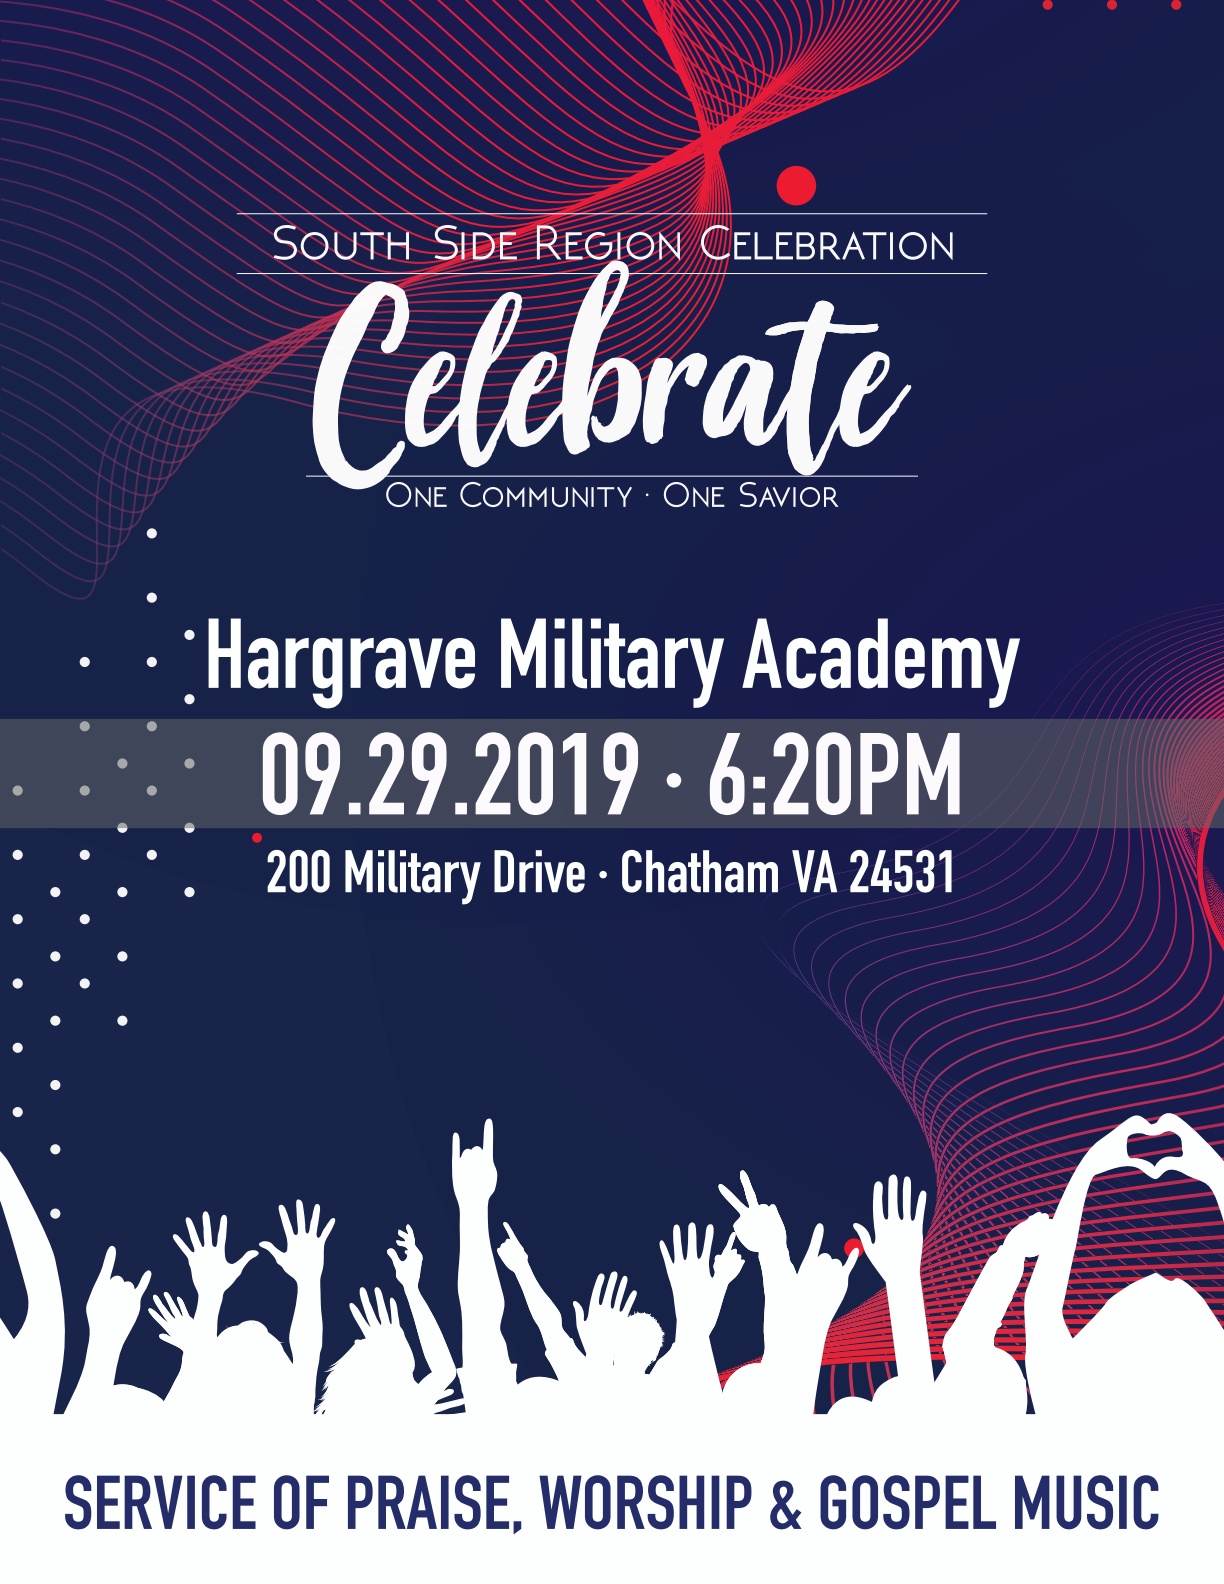 Celebrate: One Community, One Savior. Hargrave Military Academy, 09.29.2019, 6:20 PM. 200 Military Drive, Chatham, VA 24531. Service of praise, worship, and gospel music.